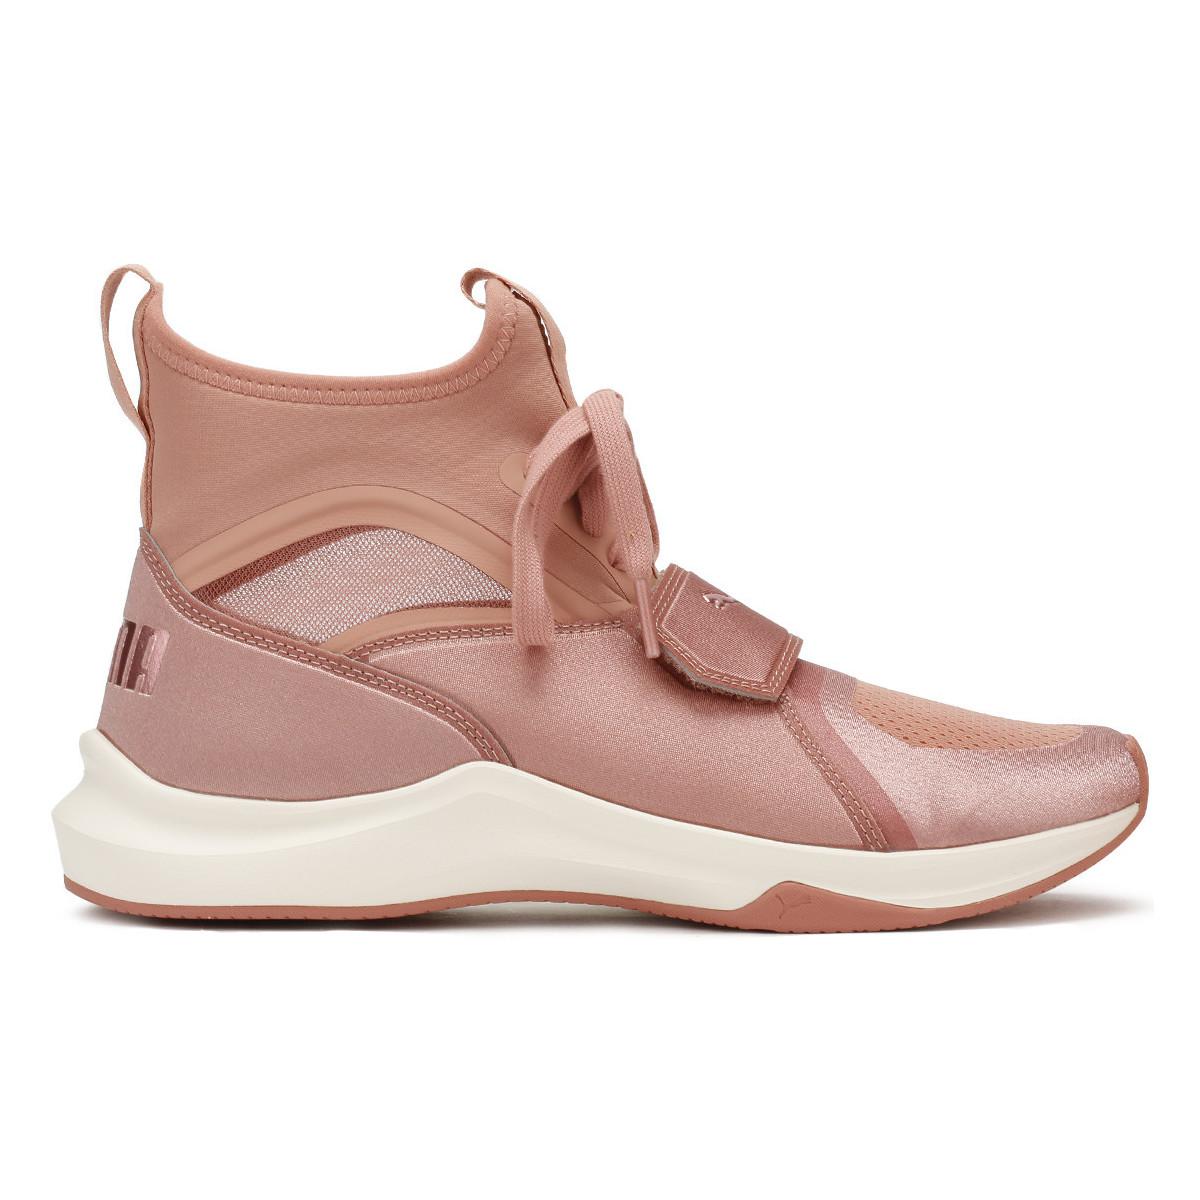 pink puma shoes selena gomez